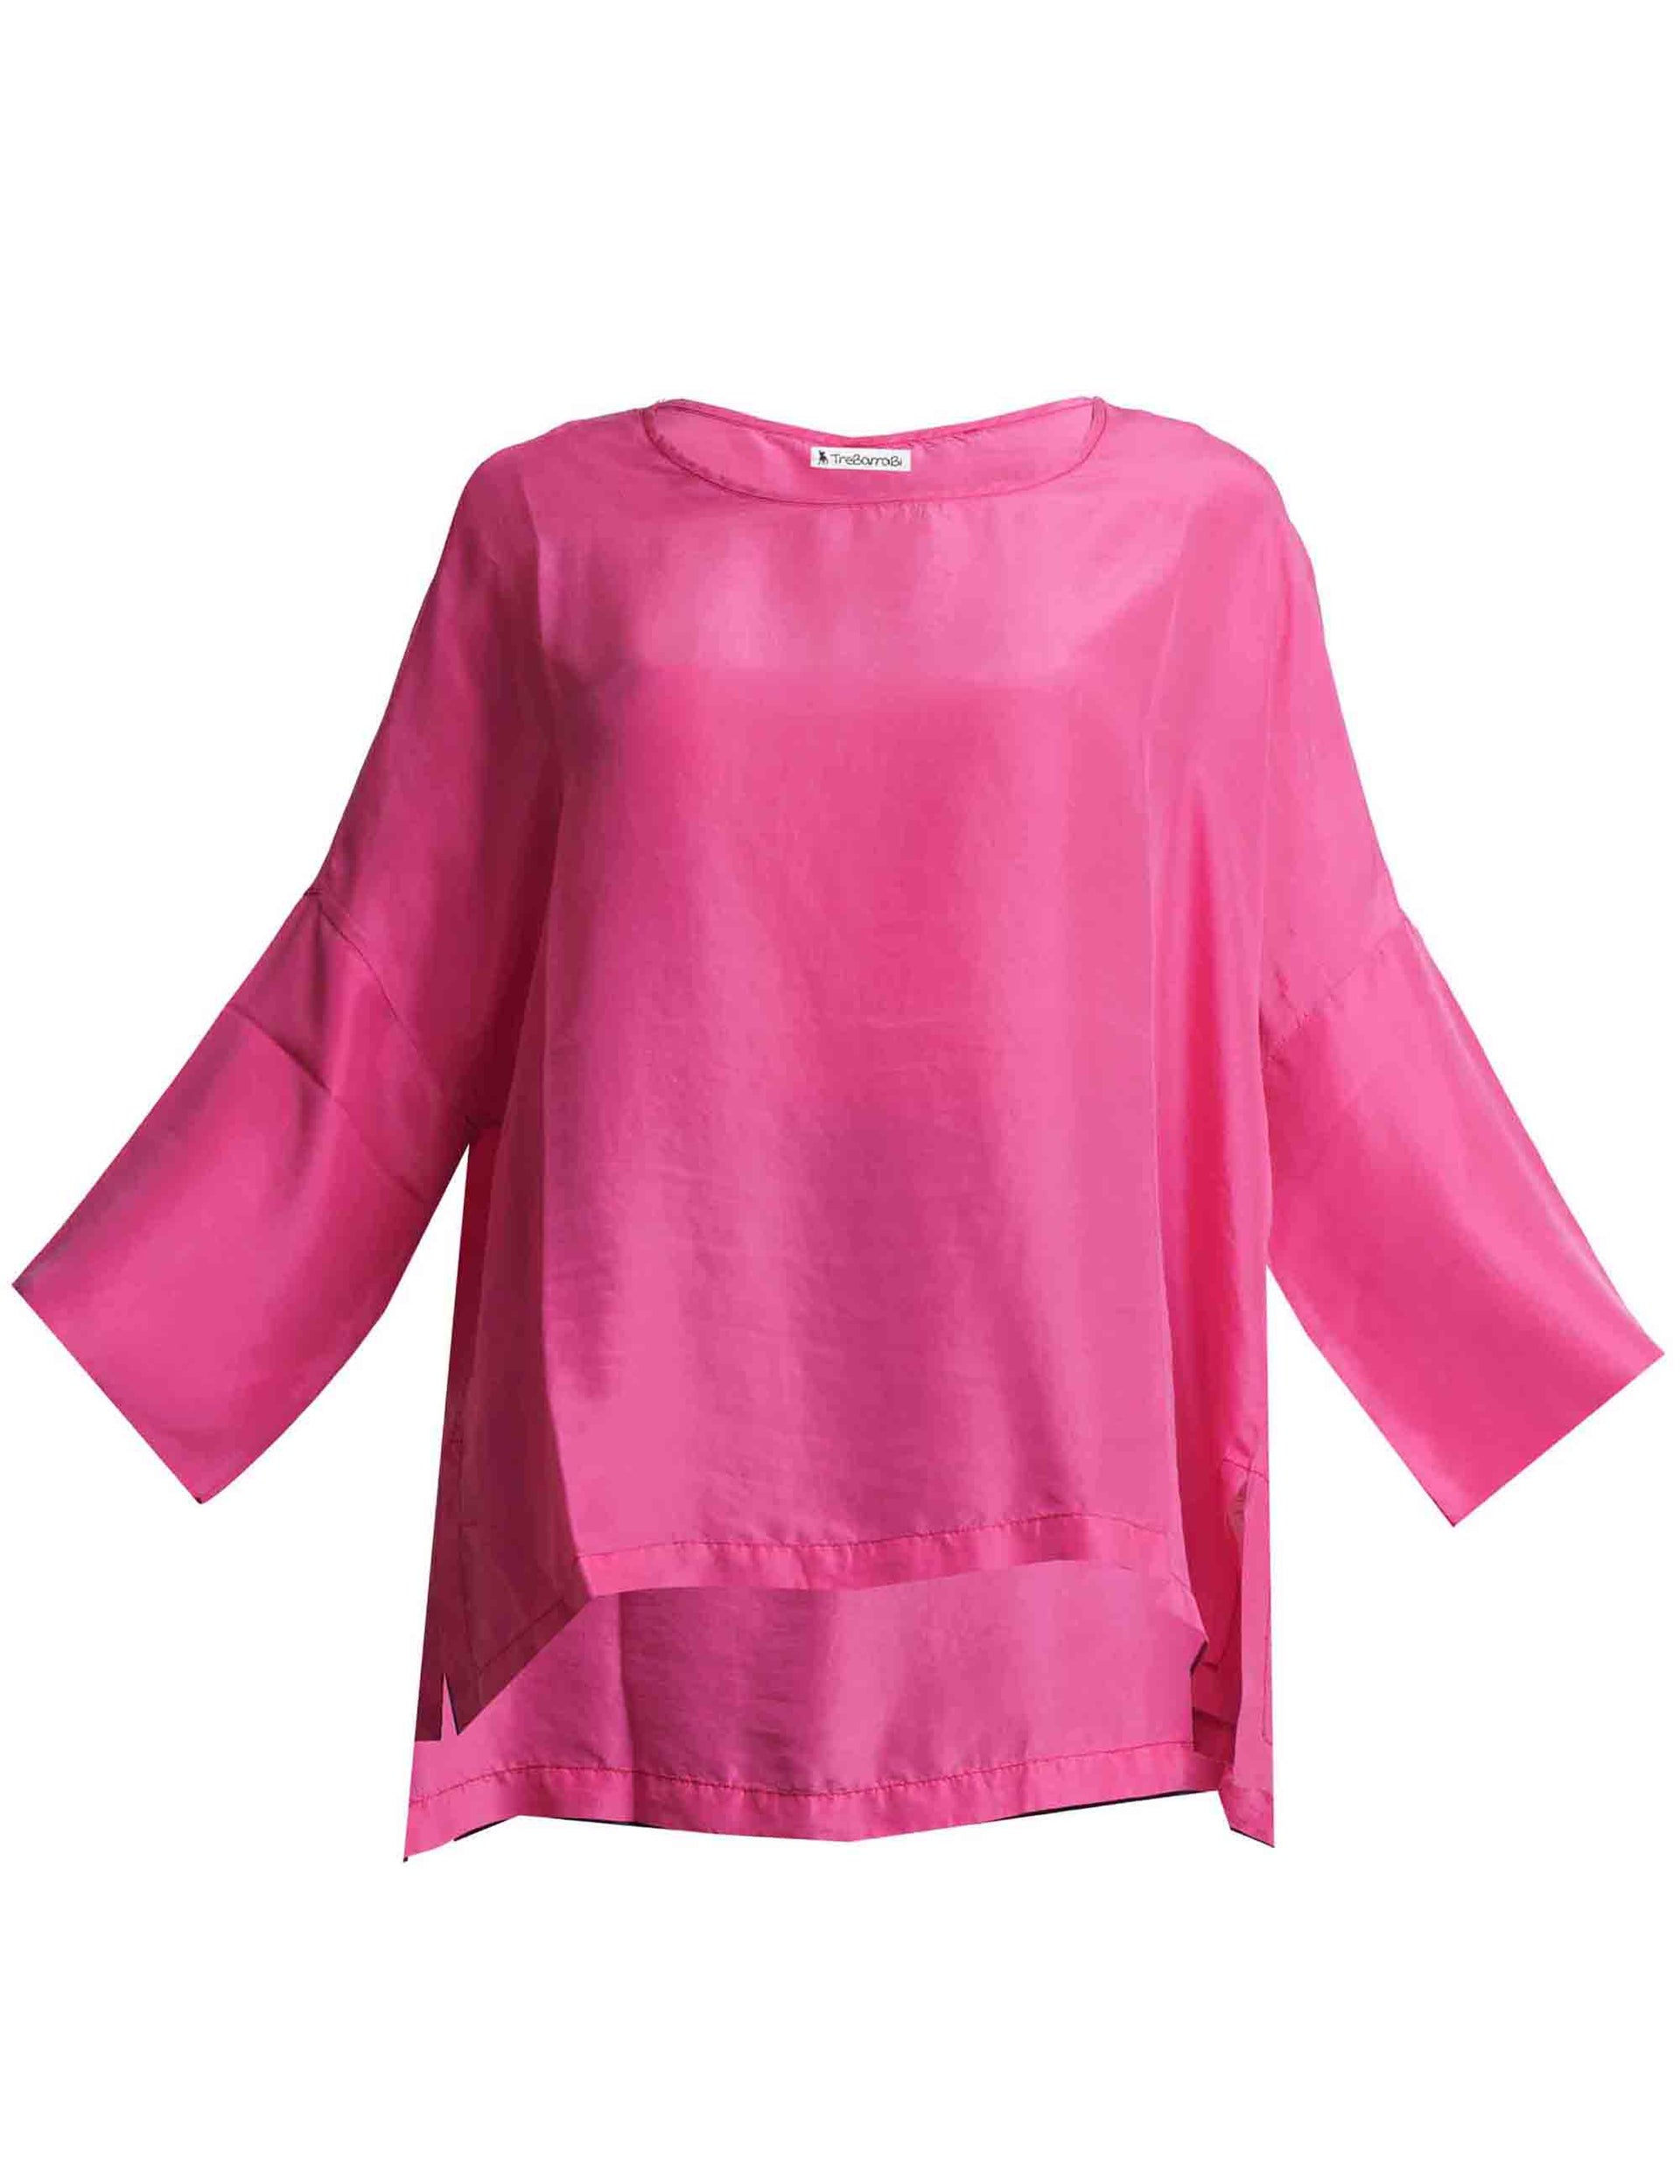 Women's magenta silk crew-neck t-shirt with 3/4 sleeves